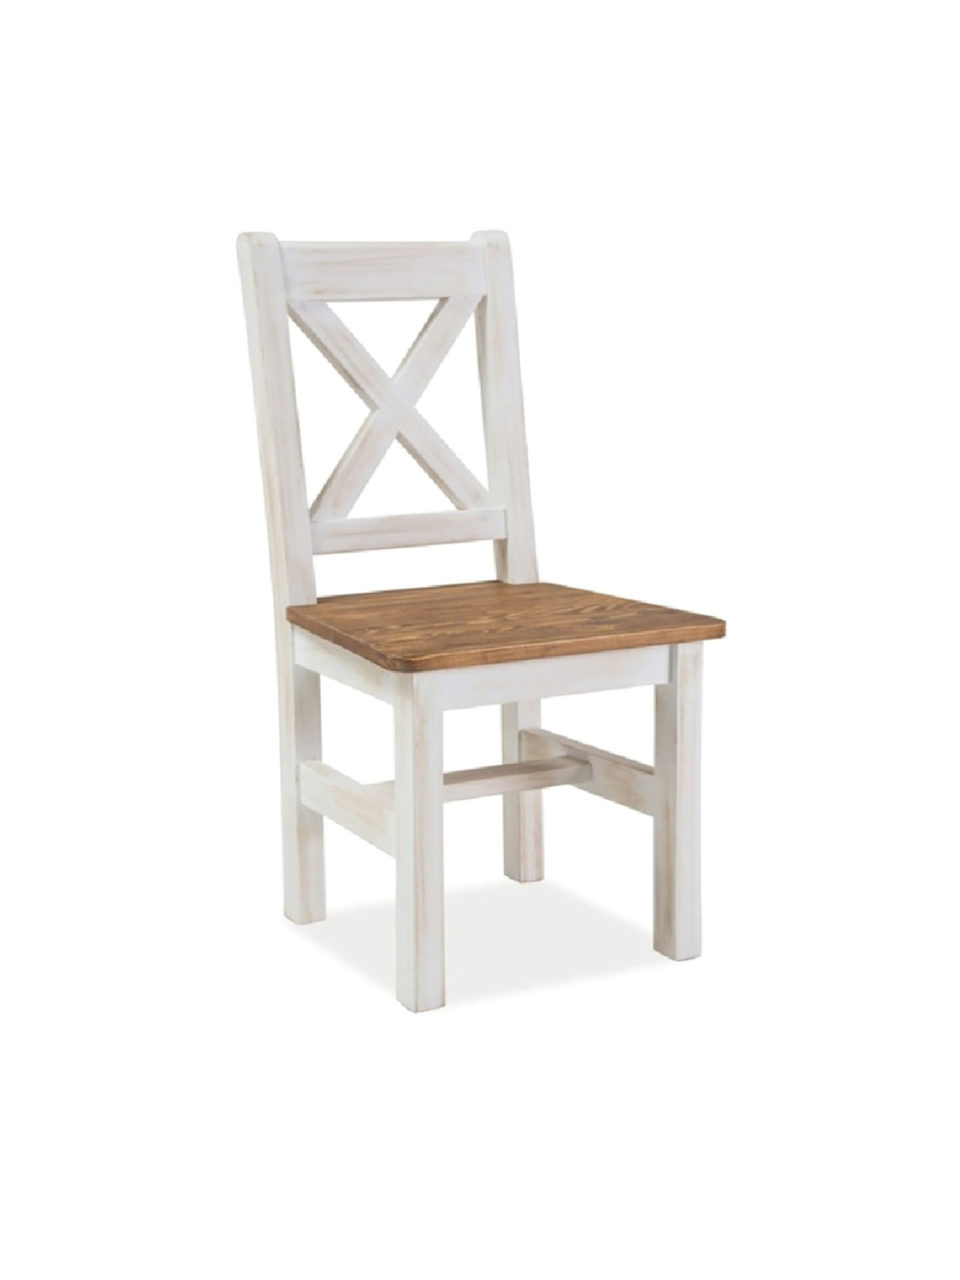 белый стул из массива дерева